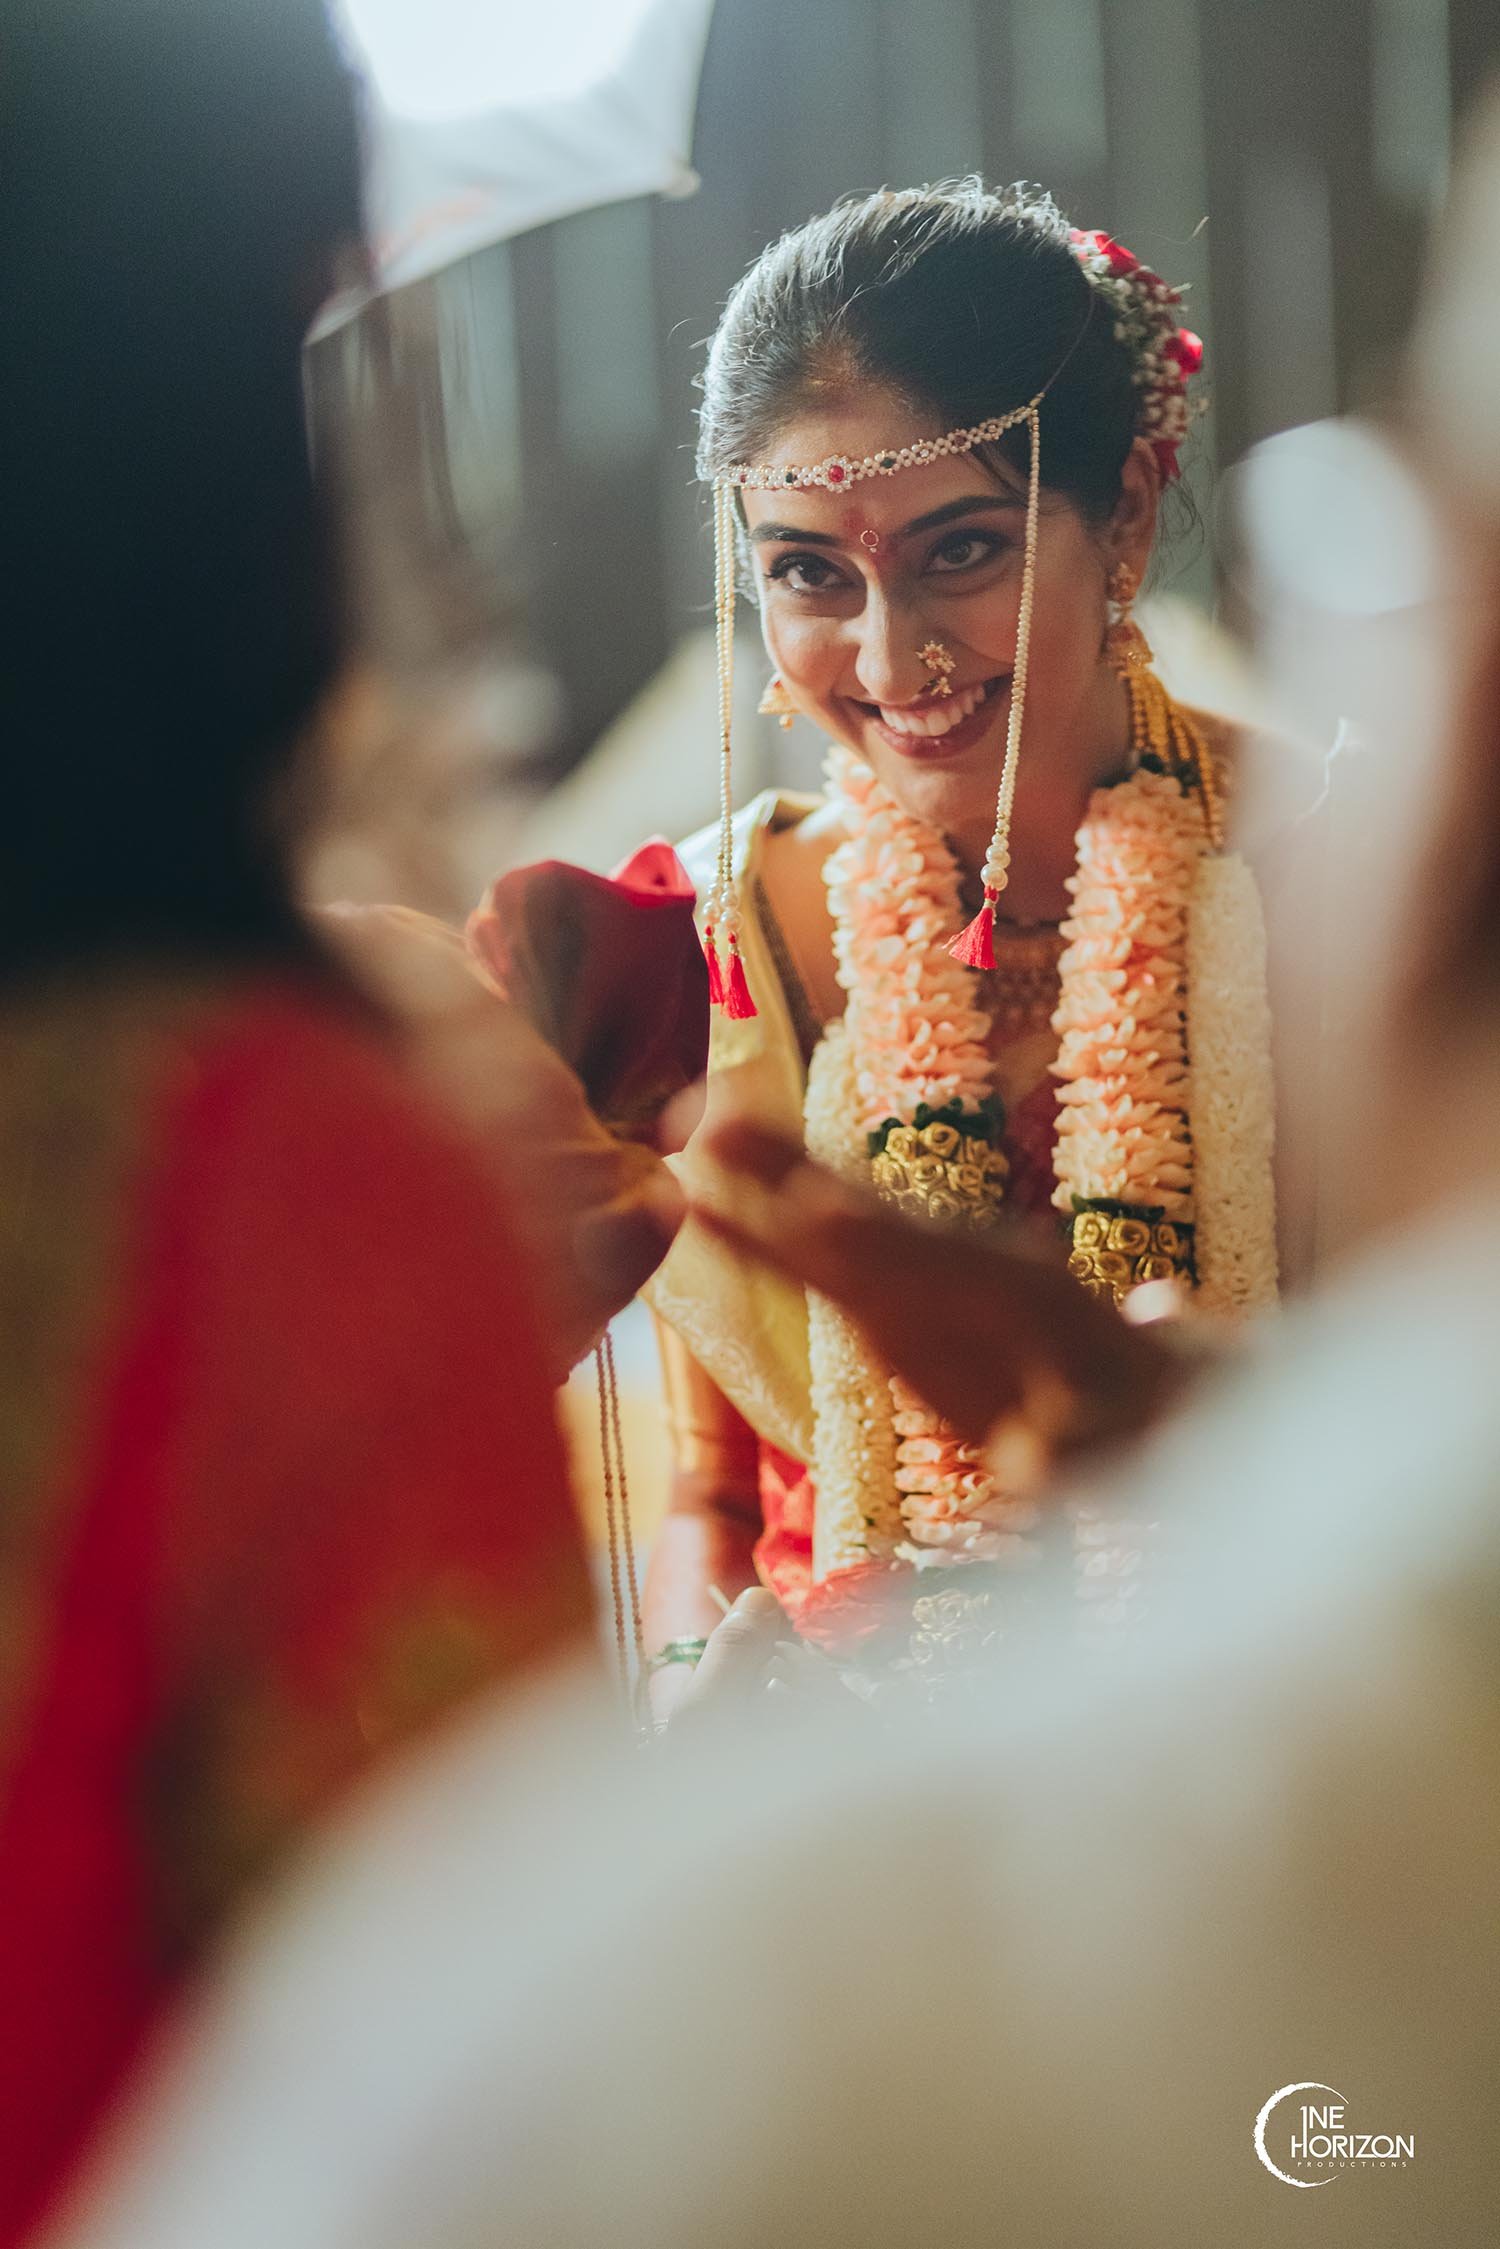 Saubhik Debanjana | Gobinda Photography | Best Wedding Photographer in  Jalpaiguri, West Bengal, India